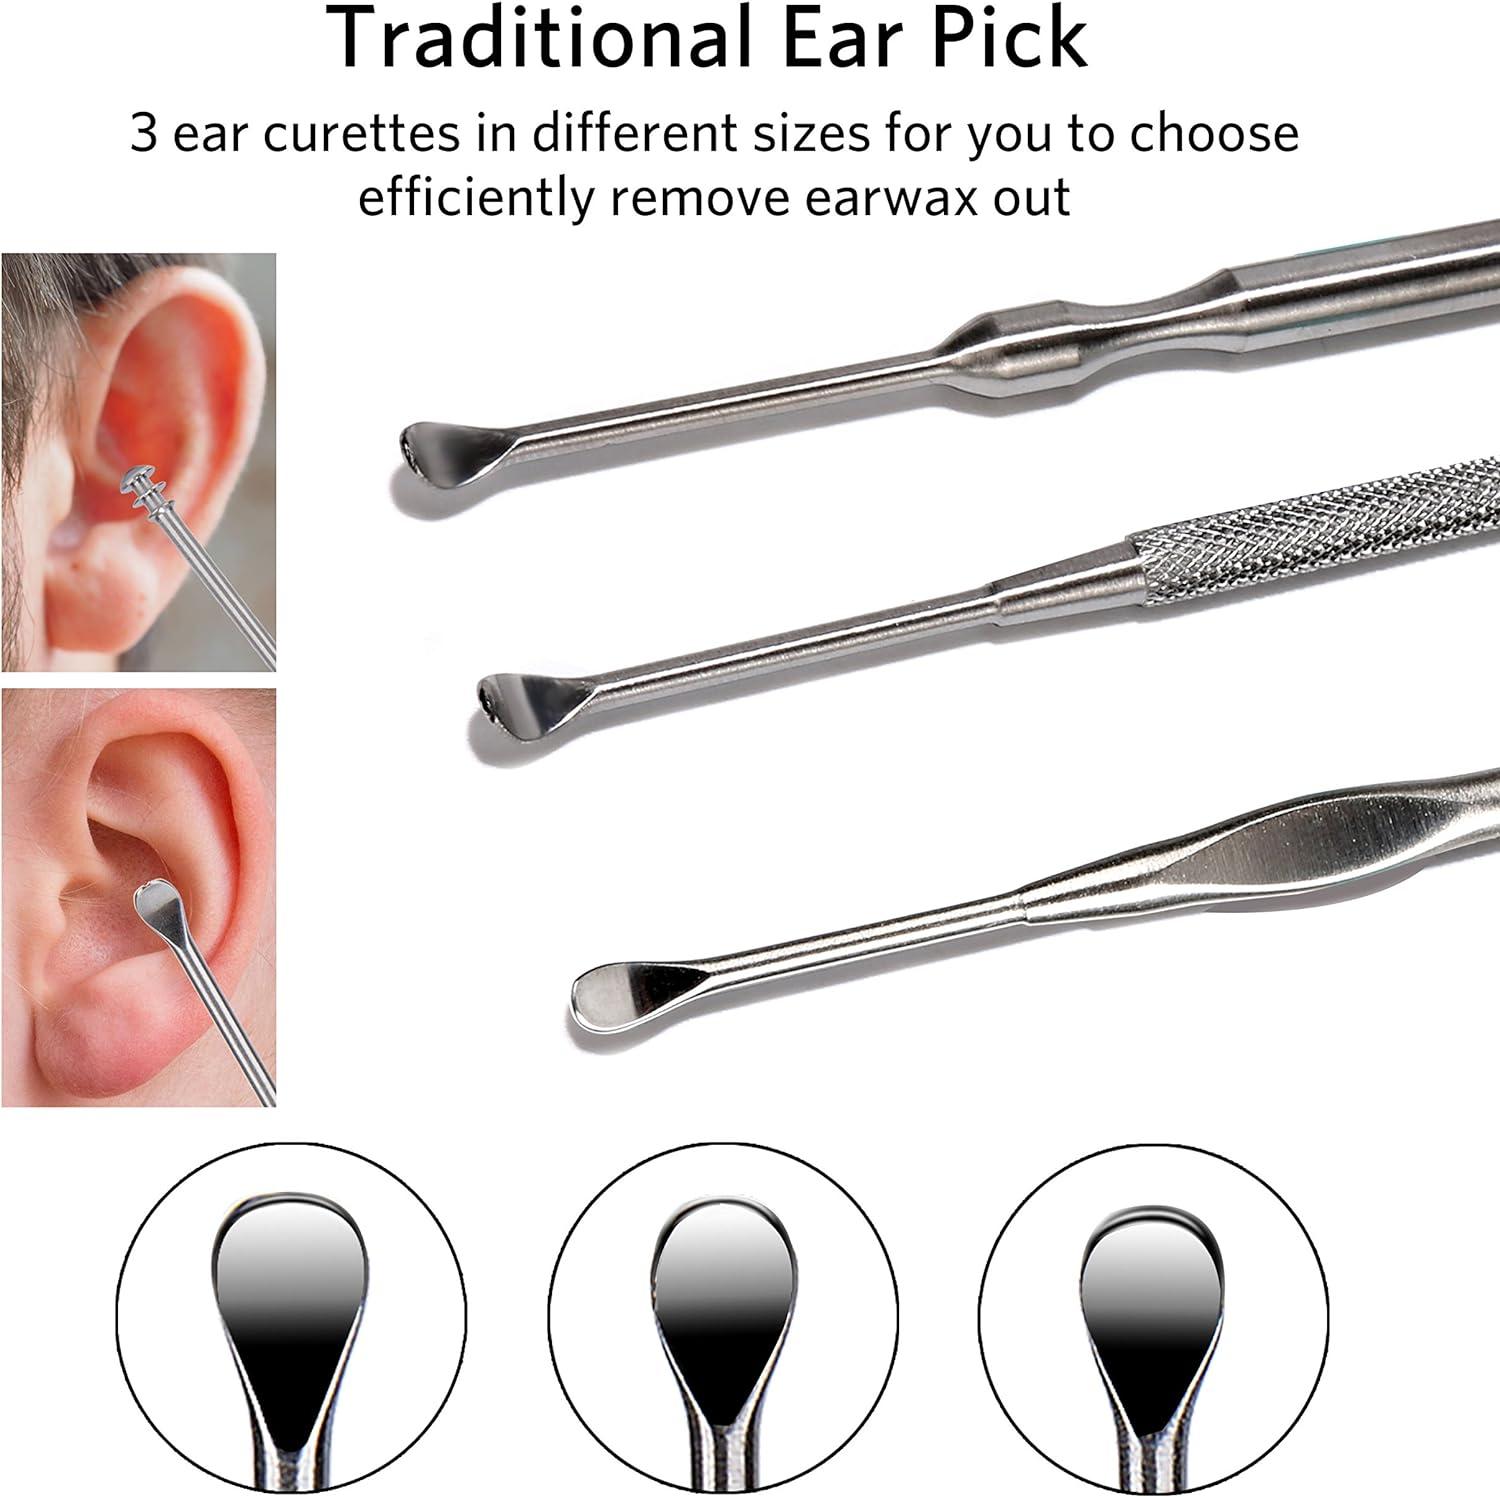 8 Pcs Ear Pick Earwax Removal Kit, Geengle Ear Cleansing Tool Set